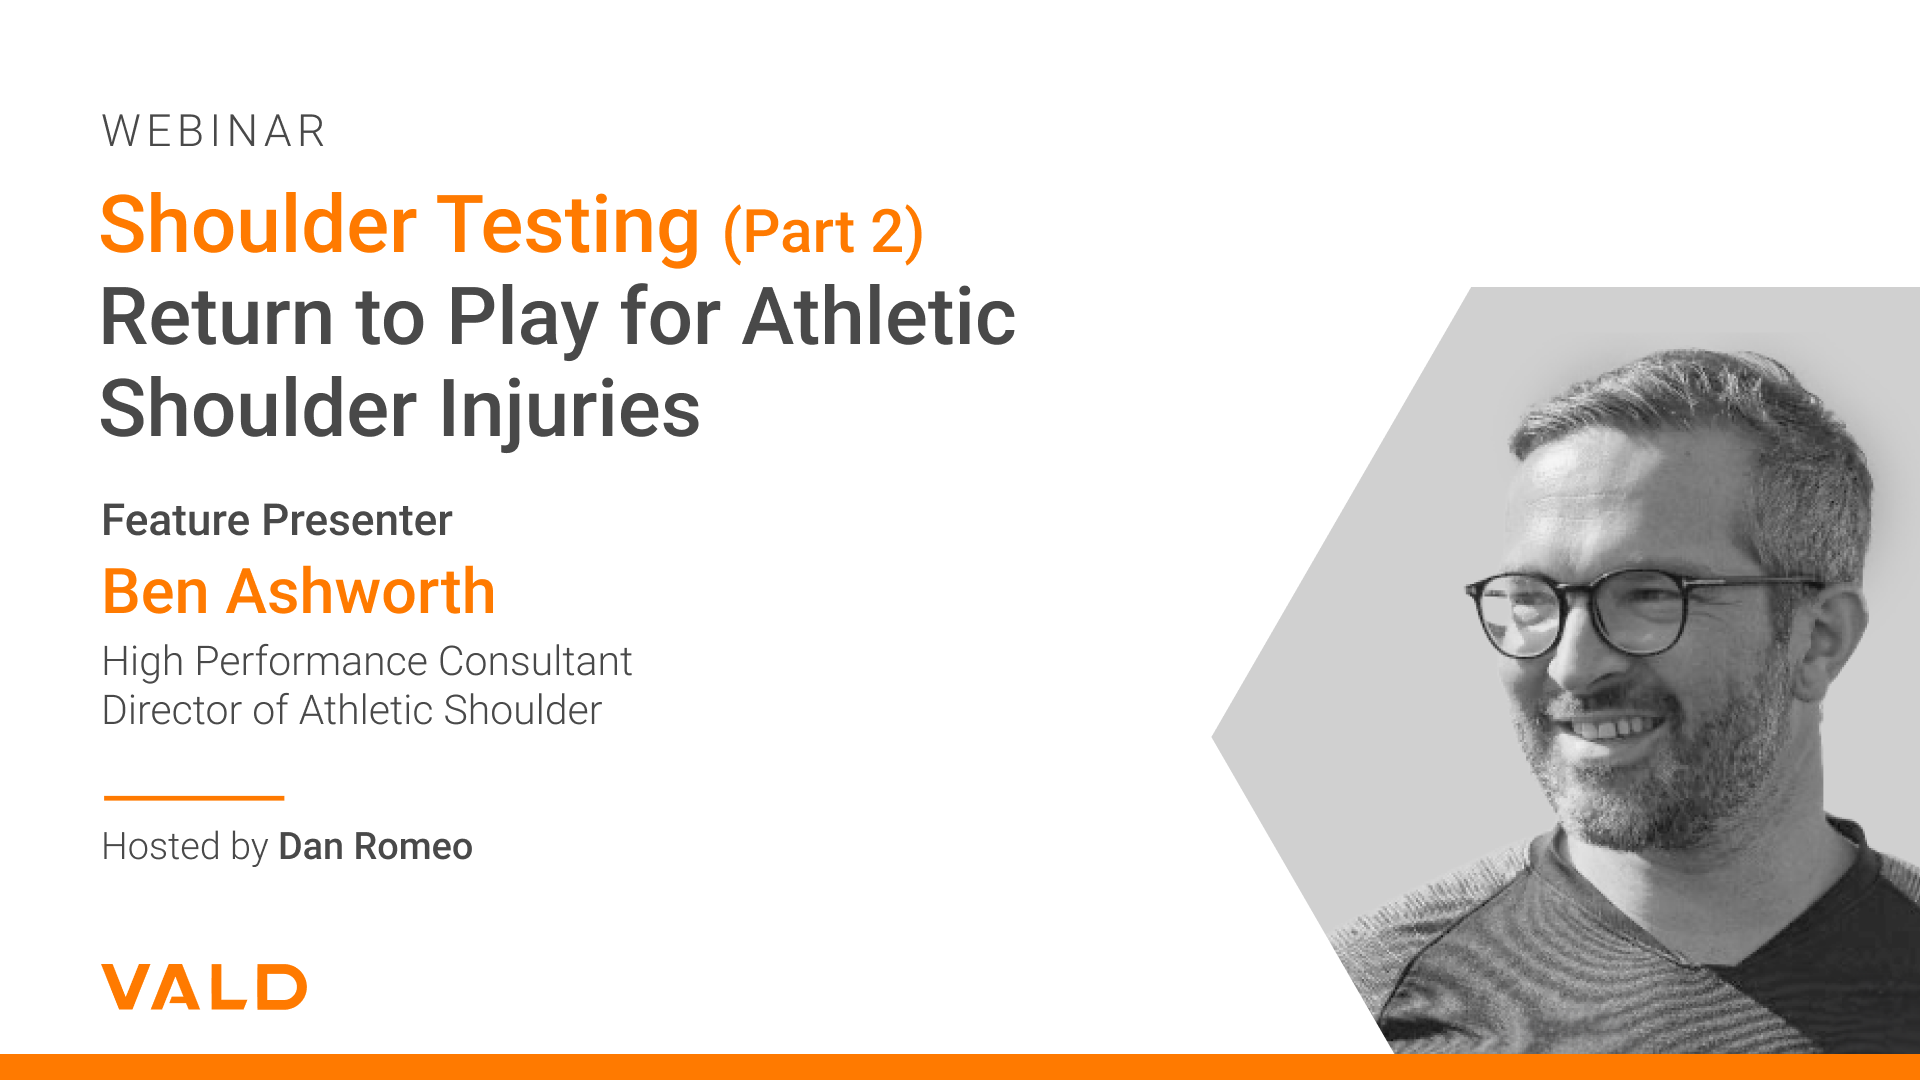 Shoulder Testing (Part 2): Return to Play for Athletic Shoulder Injuries